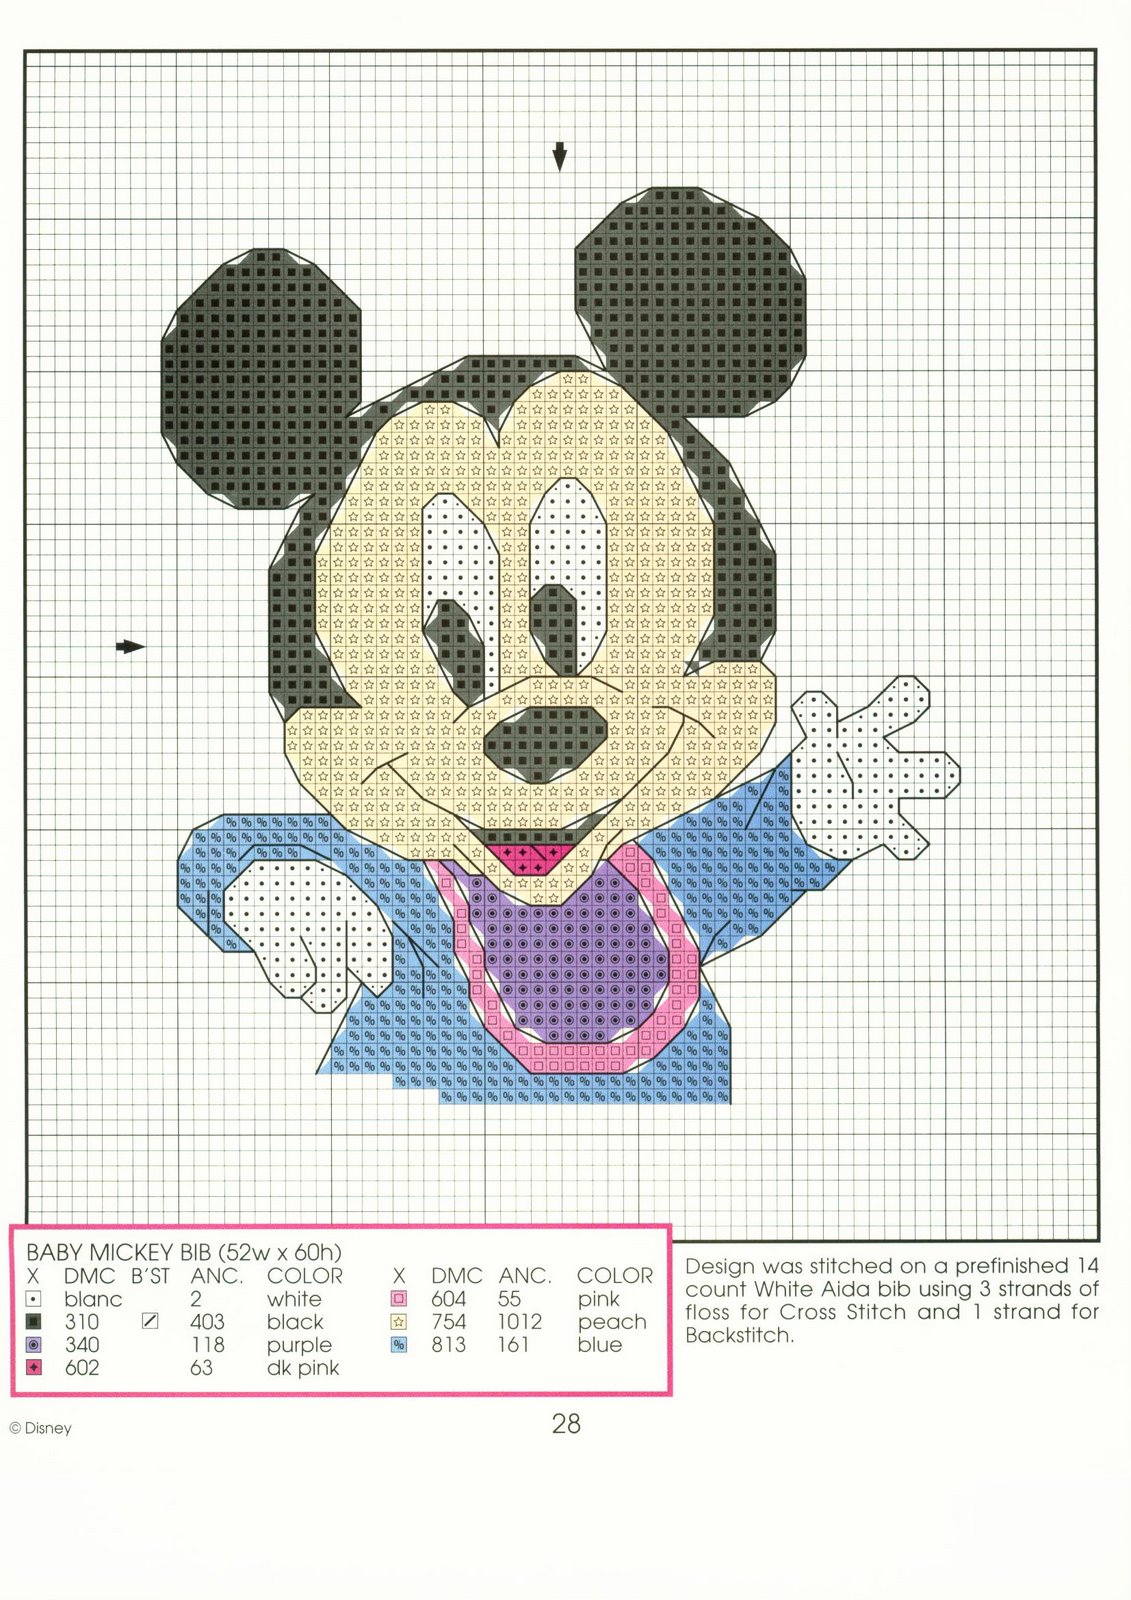 Cross stitch patterns to download Disney (10)